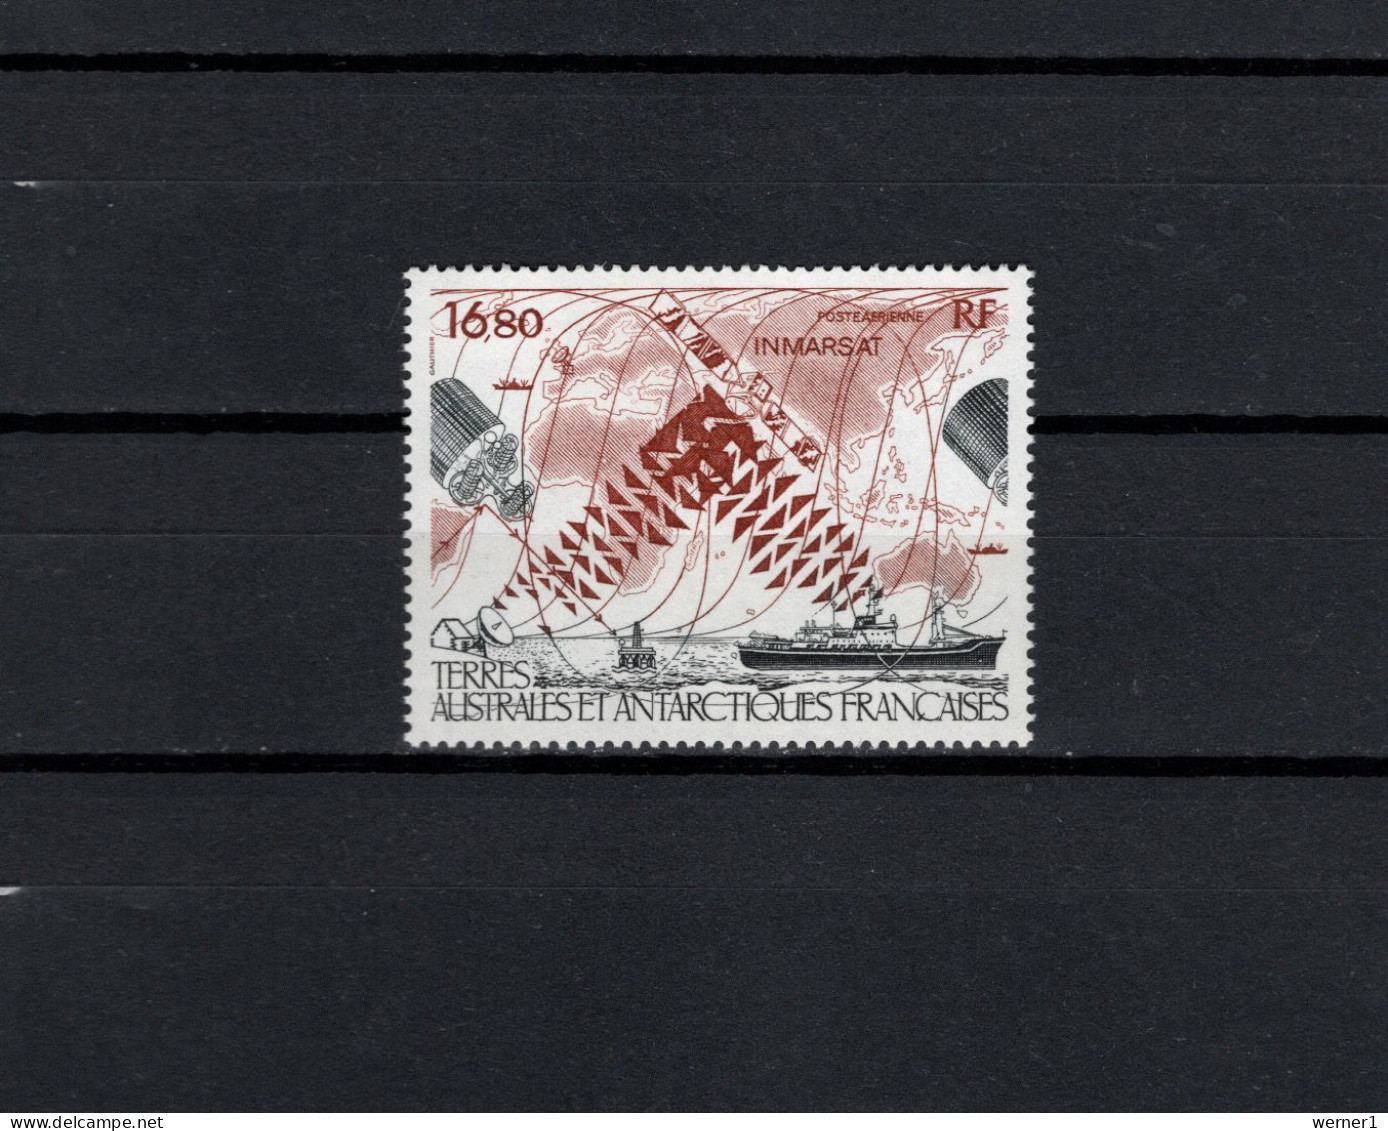 FSAT French Antarctic Territory 1987 Space, INMARSAT Stamp MNH - Ozeanien